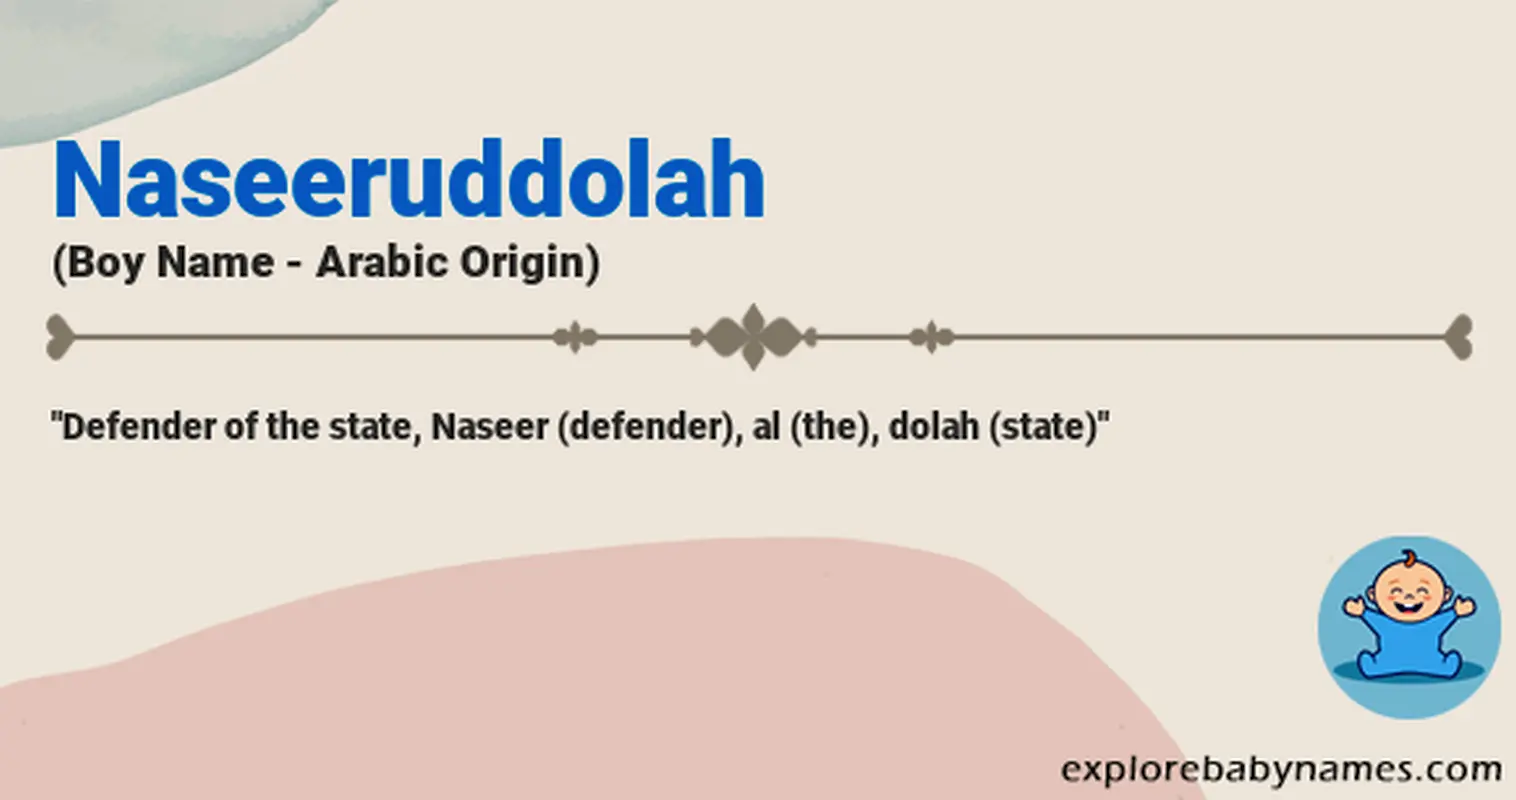 Meaning of Naseeruddolah